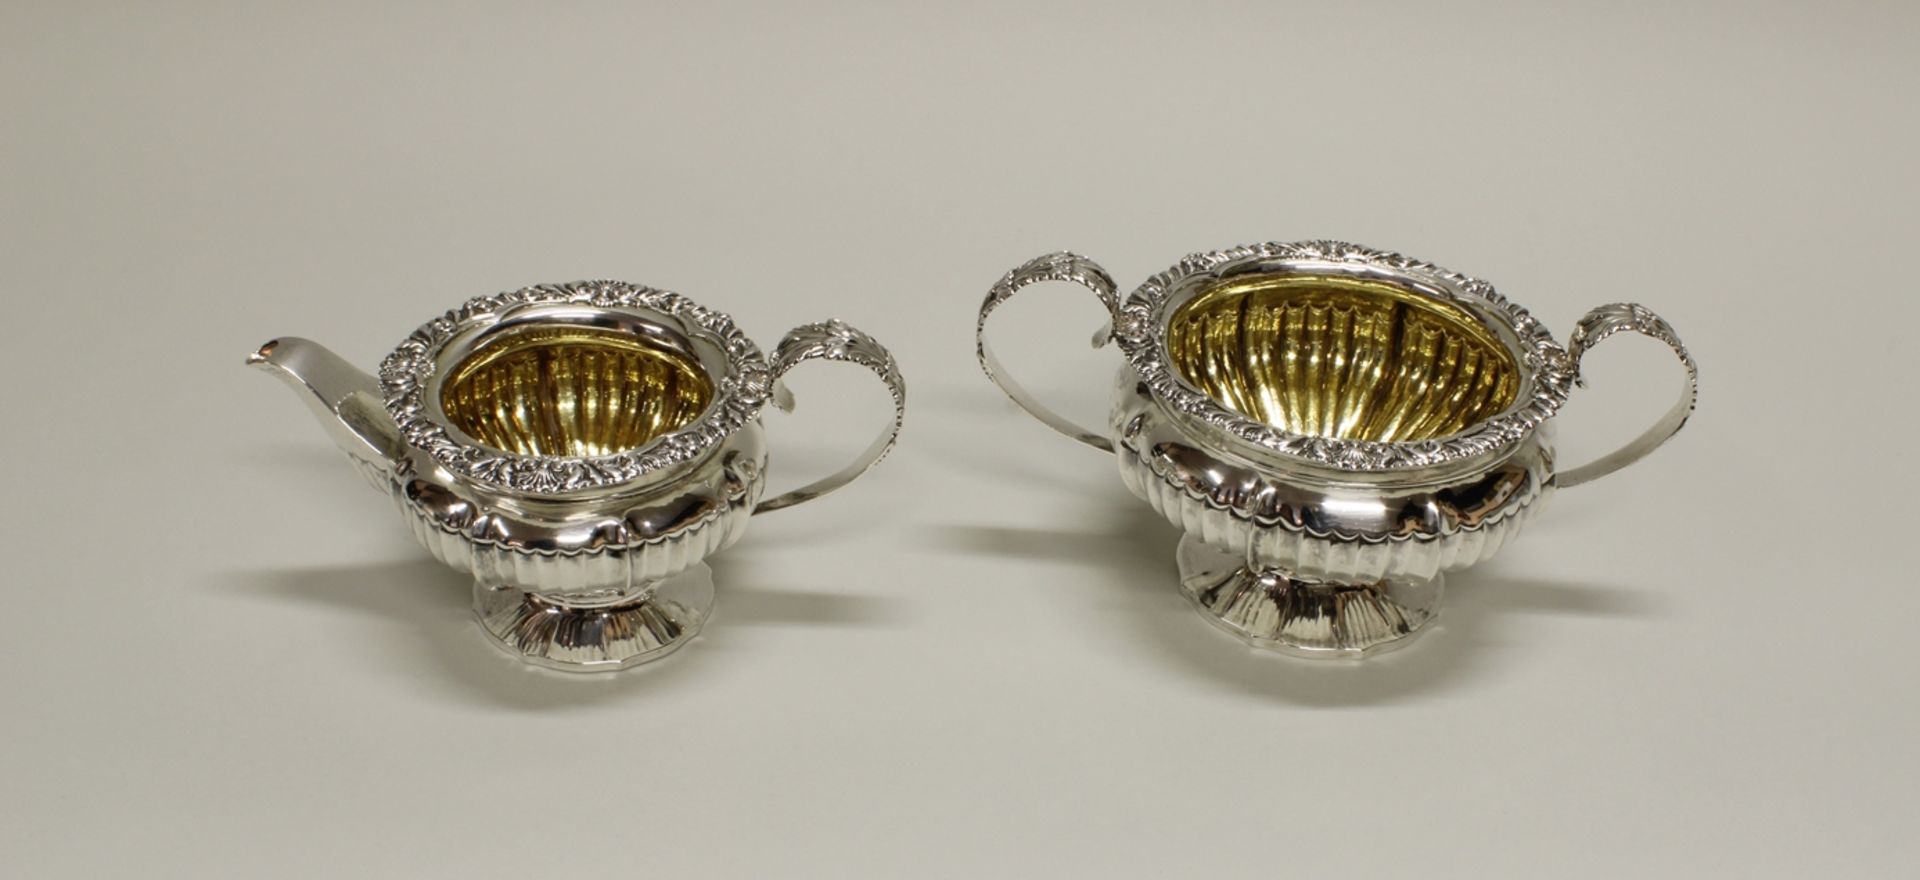 Kaffee- und Teeservice, 4-tlg., Silber 925, London, 1825/26, Edward Barton, teils innen vergoldet,  - Bild 4 aus 4